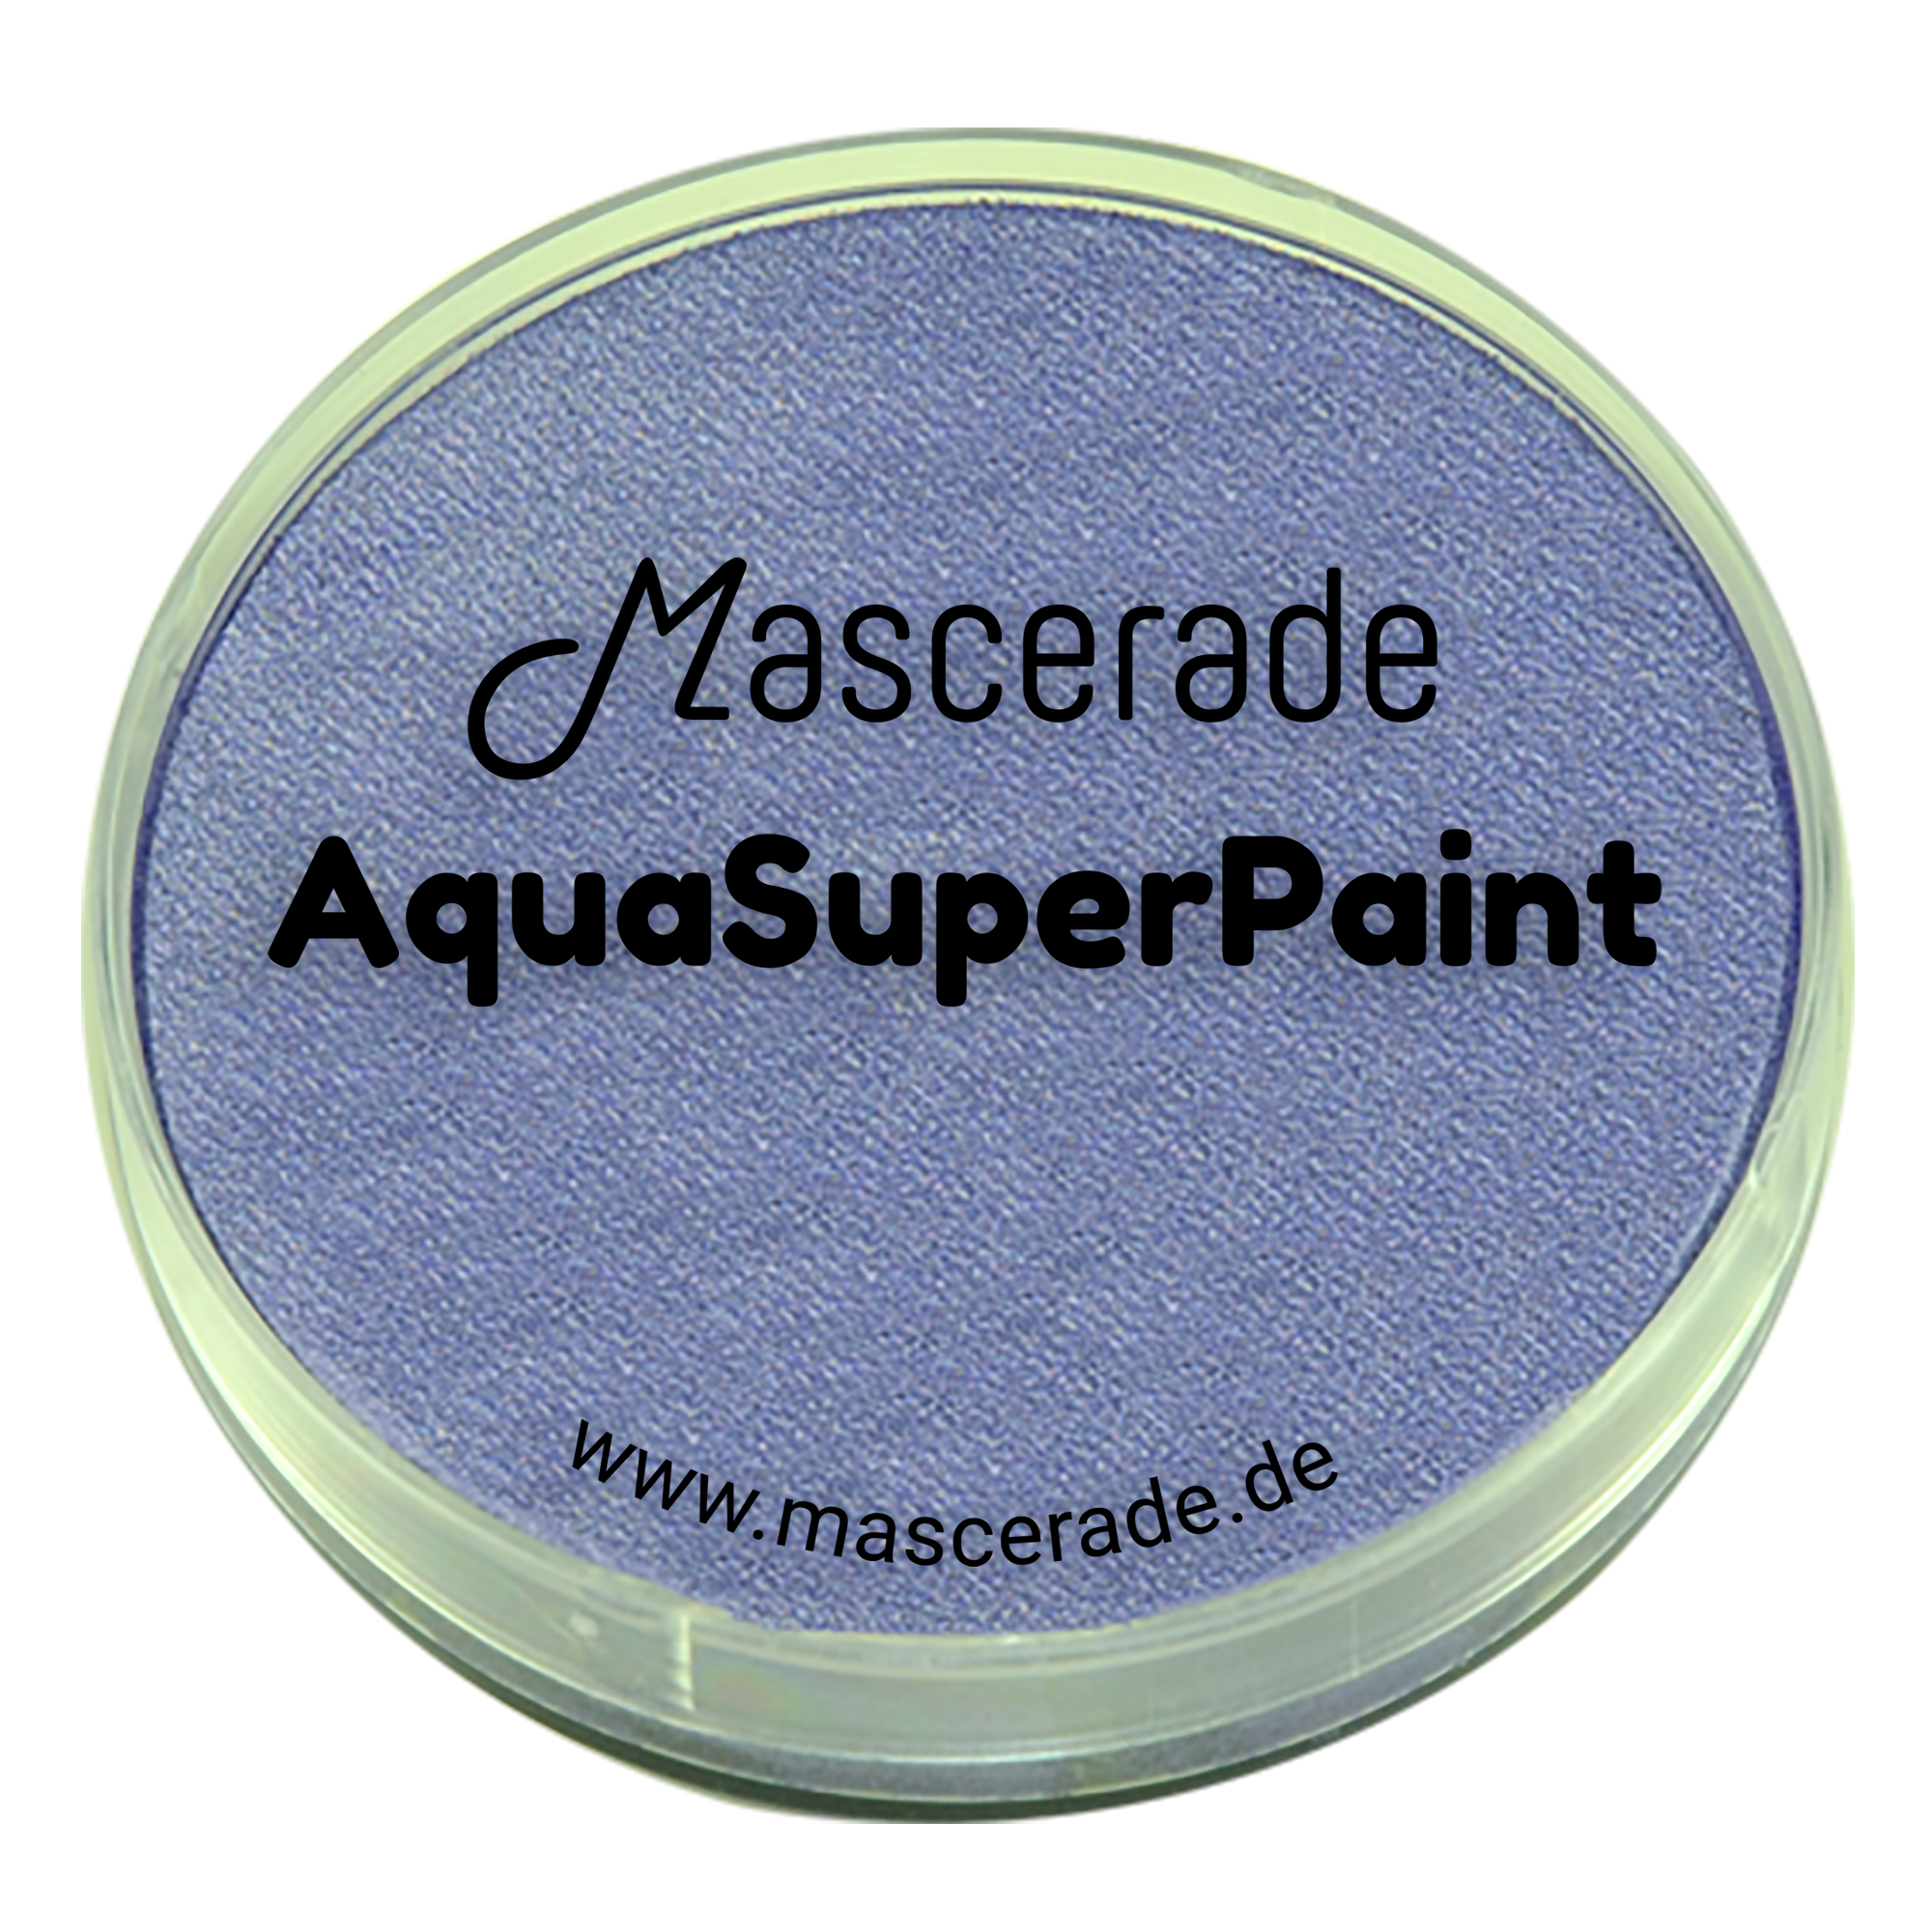 Mascerade AquaSuperPaint Violett mit Glitter 30 ml Dose